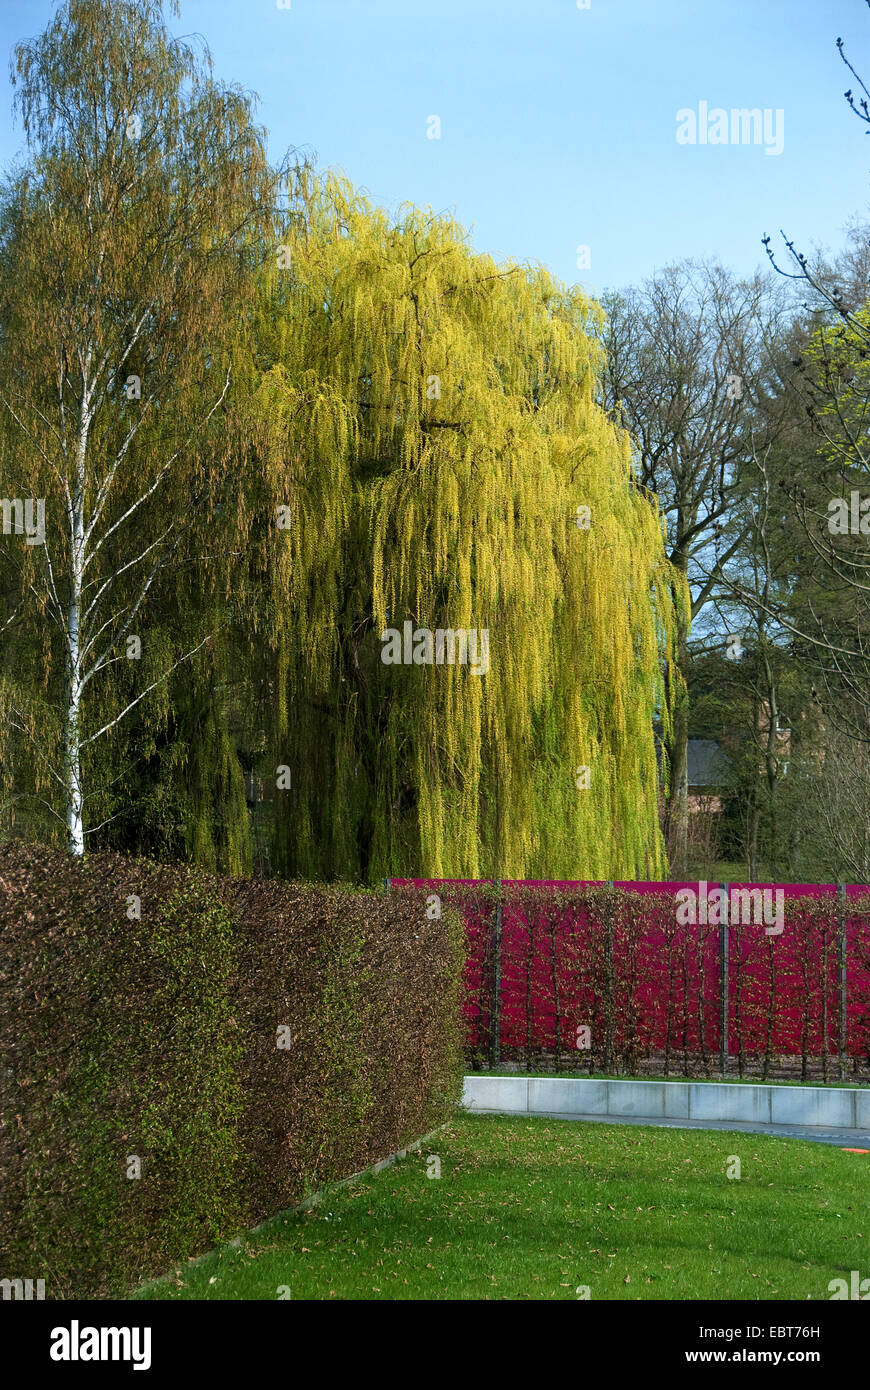 Gris enano sauce (Salix alba "Tristis', Salix alba Tristis), cultivar Tristis en un parque en otoño Foto de stock